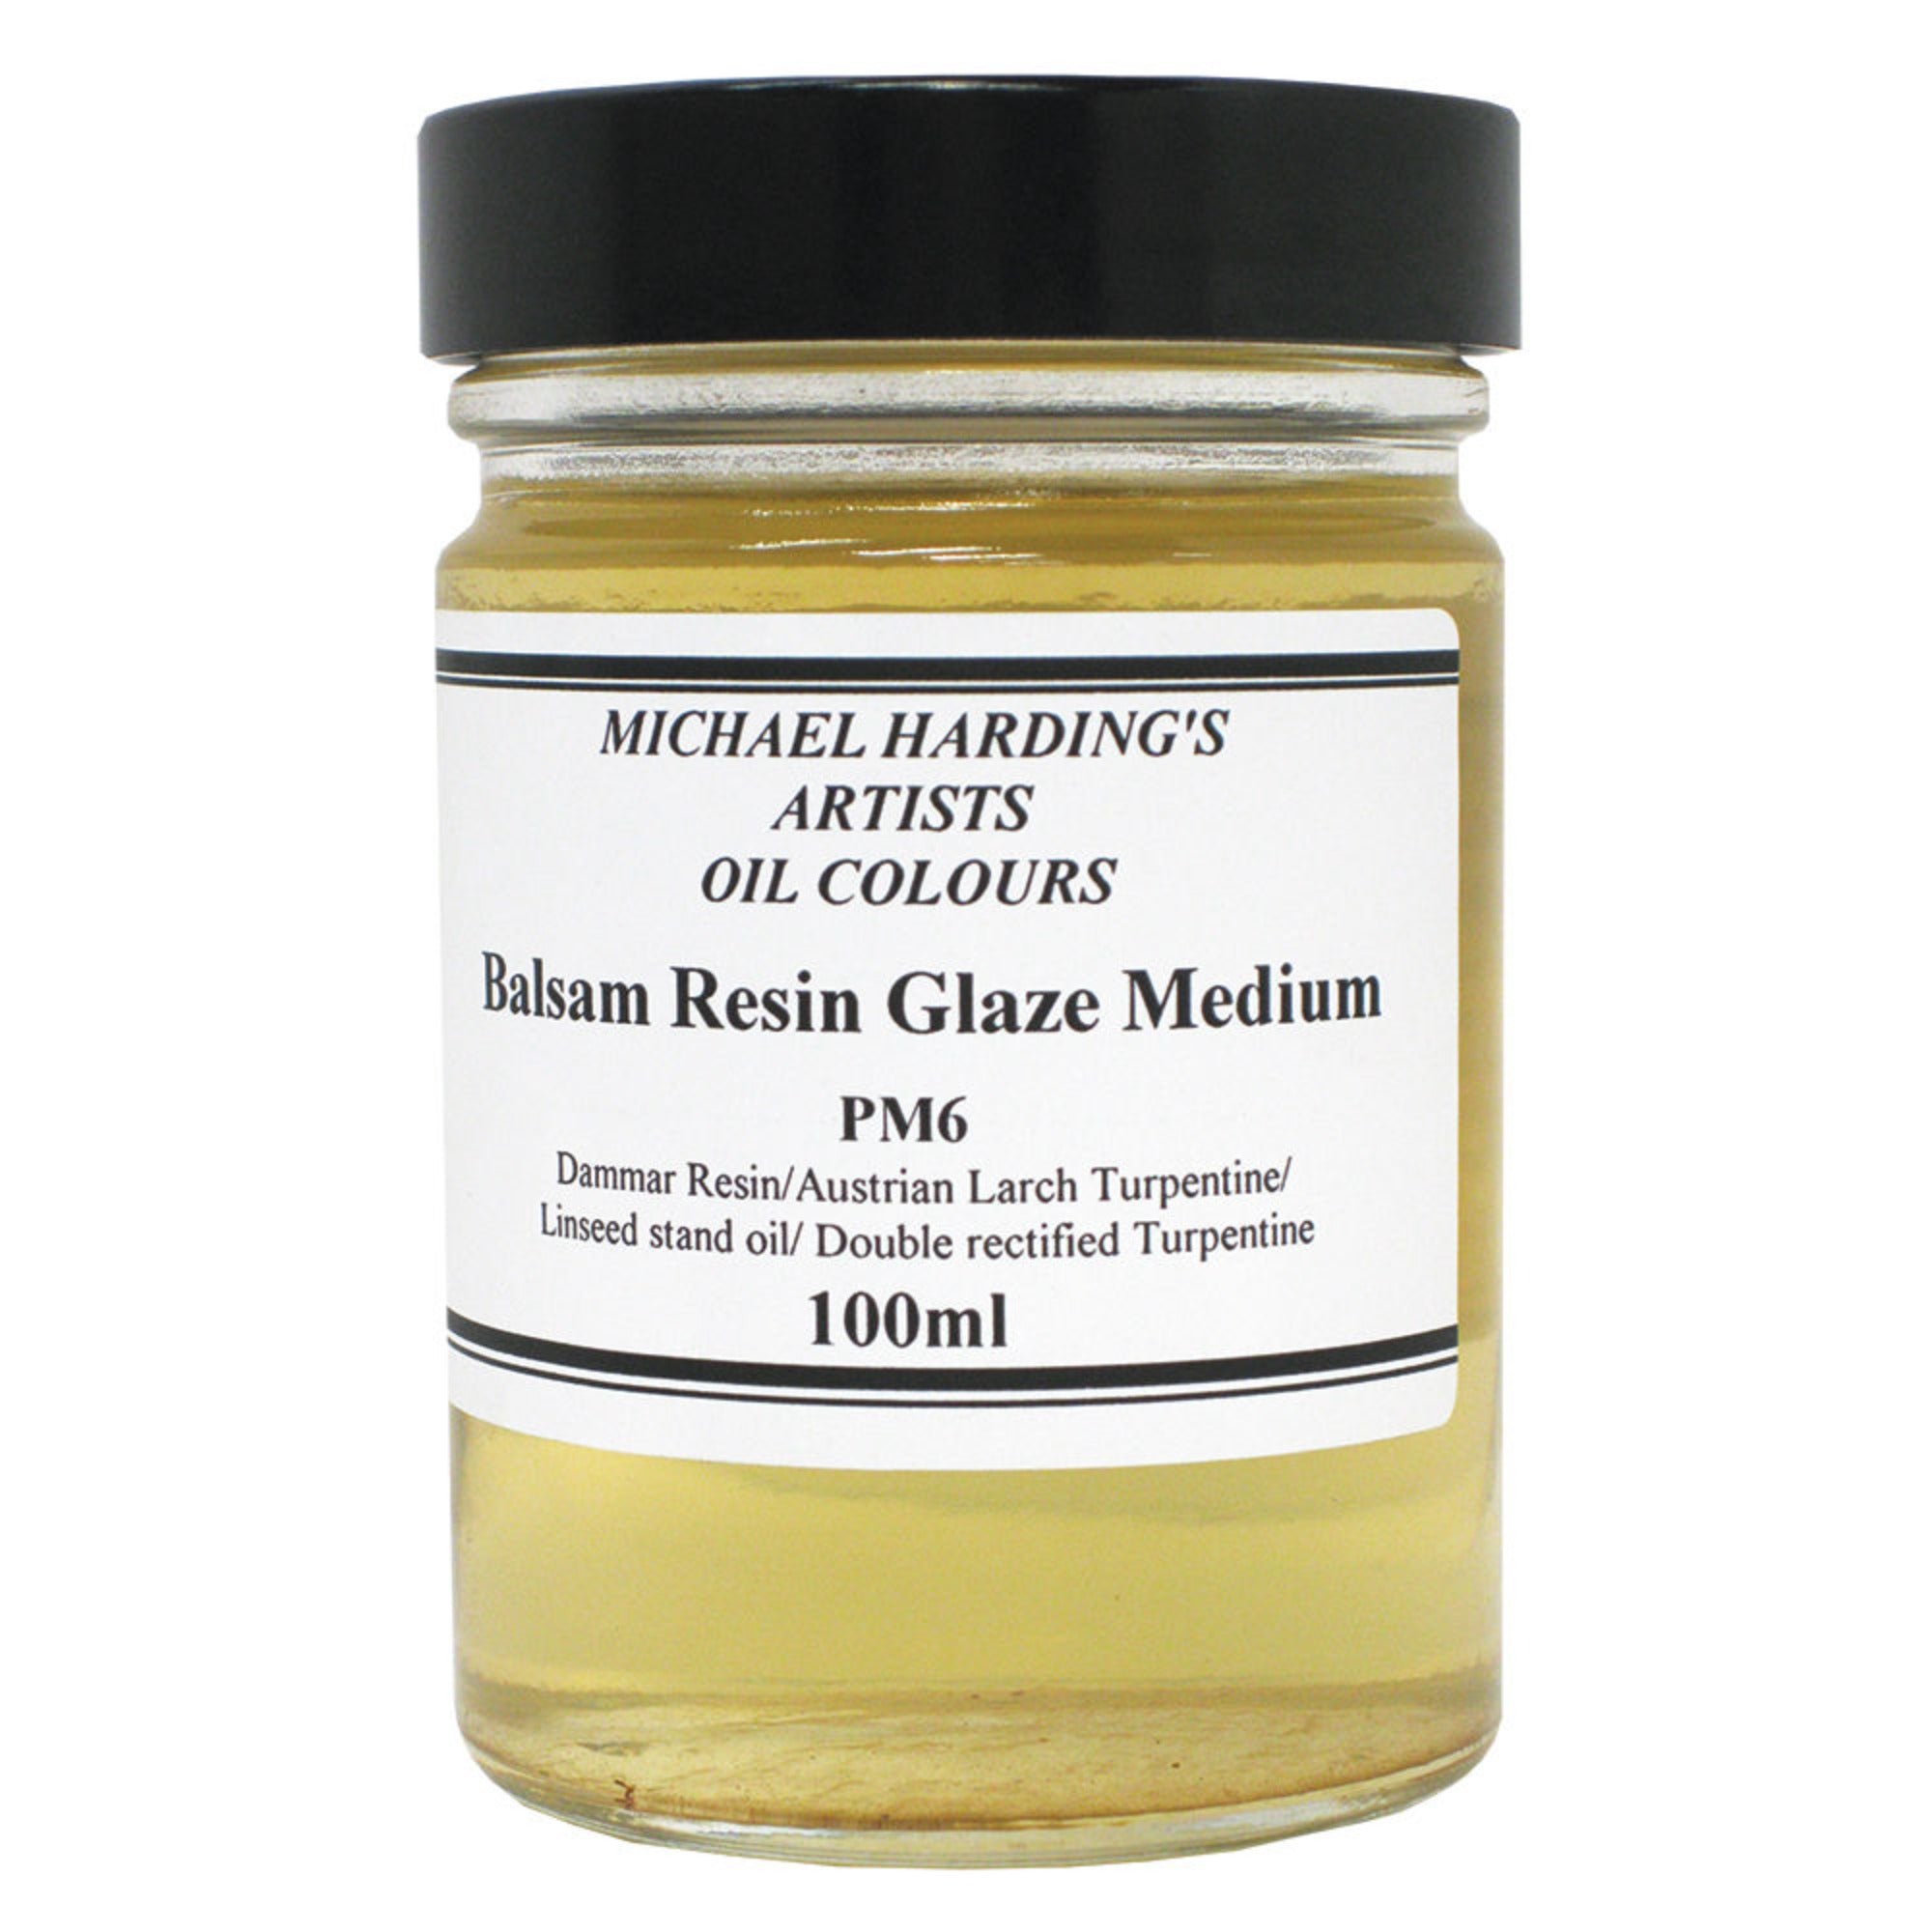 Michael Harding Balsam-Resin Glaze Medium100ml Jar